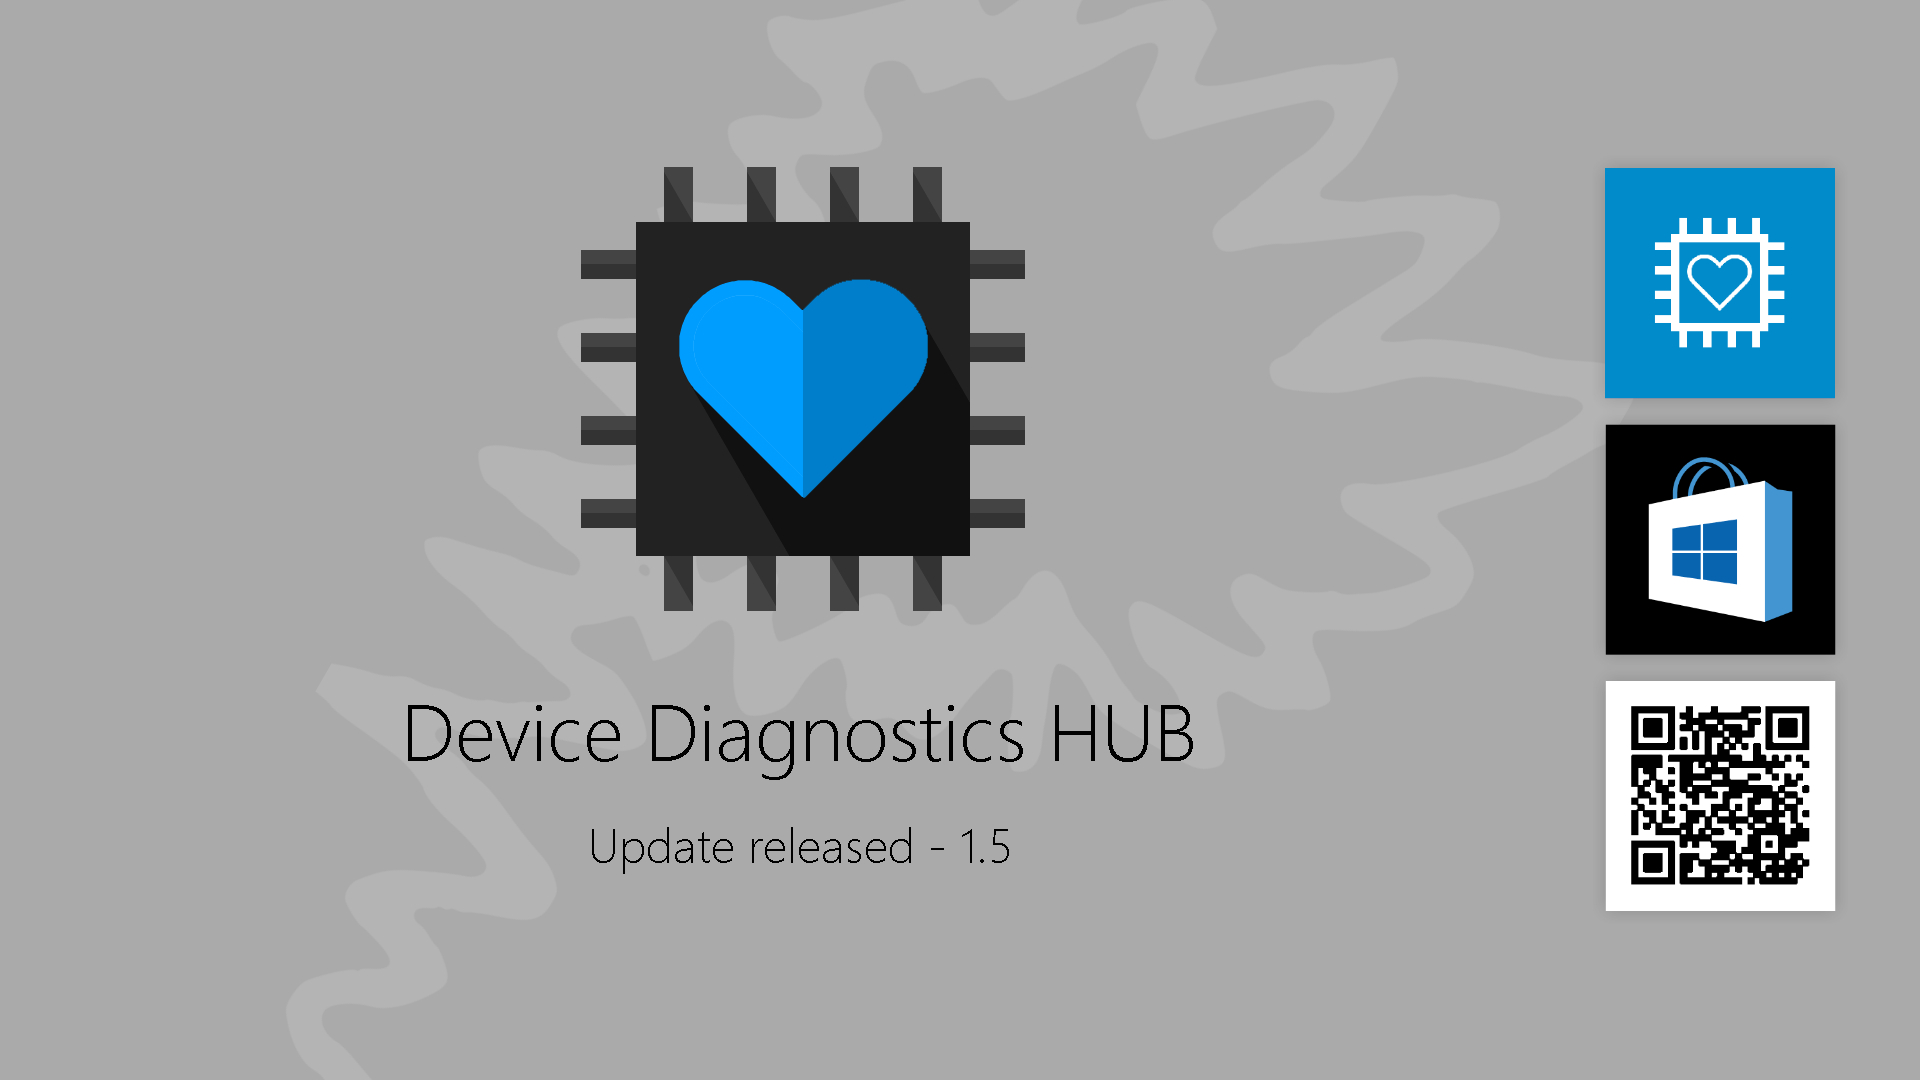 Device Diagnostics HUB